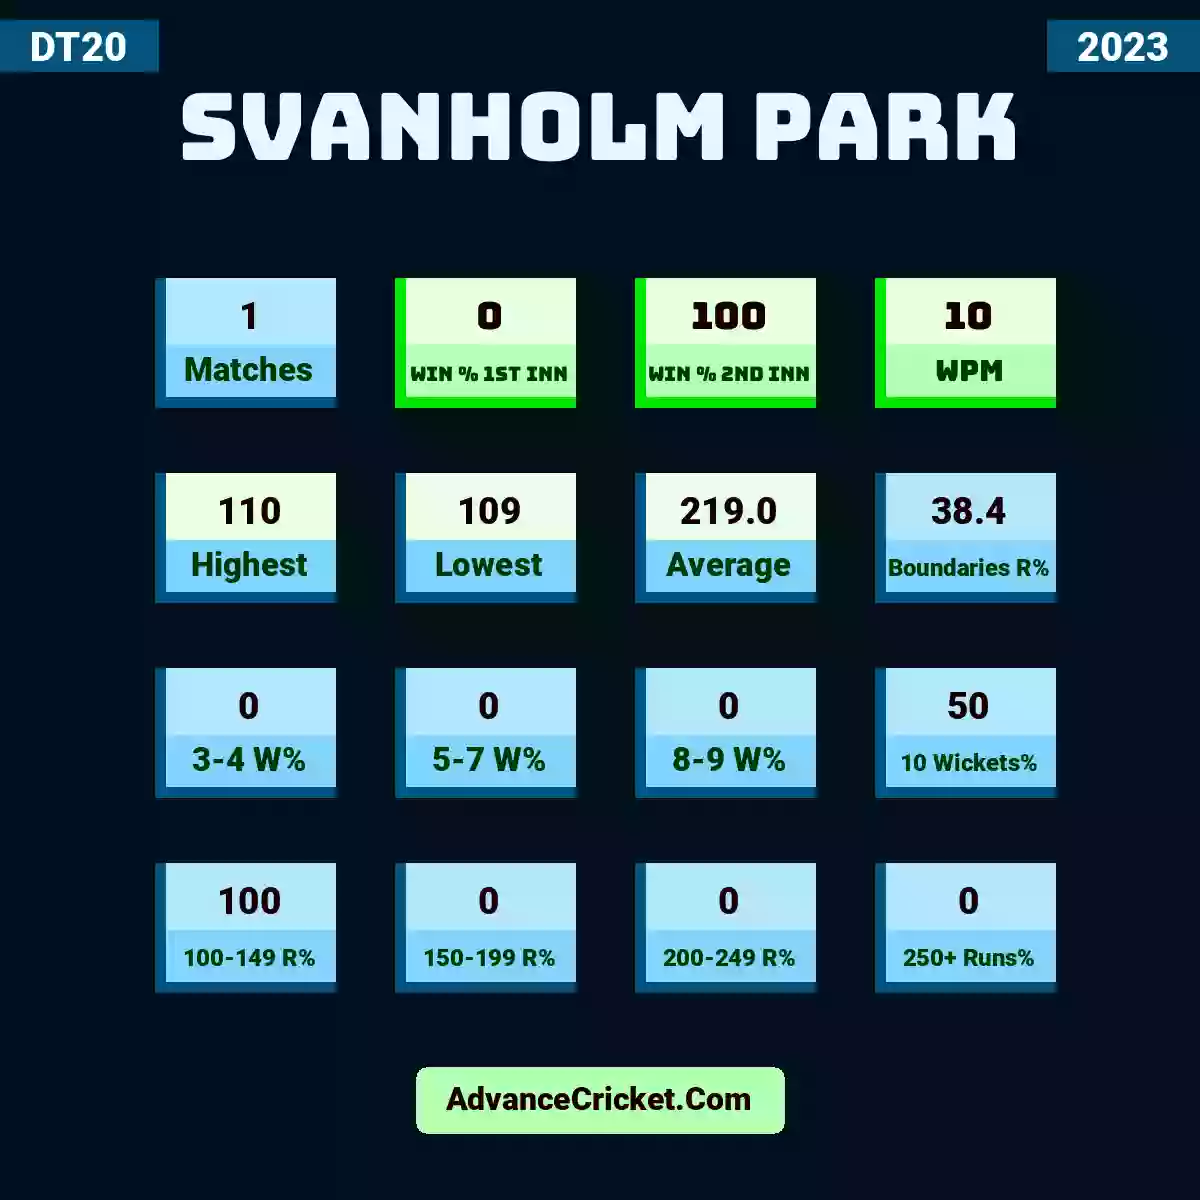 Image showing Svanholm Park with Matches: 1, Win % 1st Inn: 0, Win % 2nd Inn: 100, WPM: 10, Highest: 110, Lowest: 109, Average: 219.0, Boundaries R%: 38.4, 3-4 W%: 0, 5-7 W%: 0, 8-9 W%: 0, 10 Wickets%: 50, 100-149 R%: 100, 150-199 R%: 0, 200-249 R%: 0, 250+ Runs%: 0.